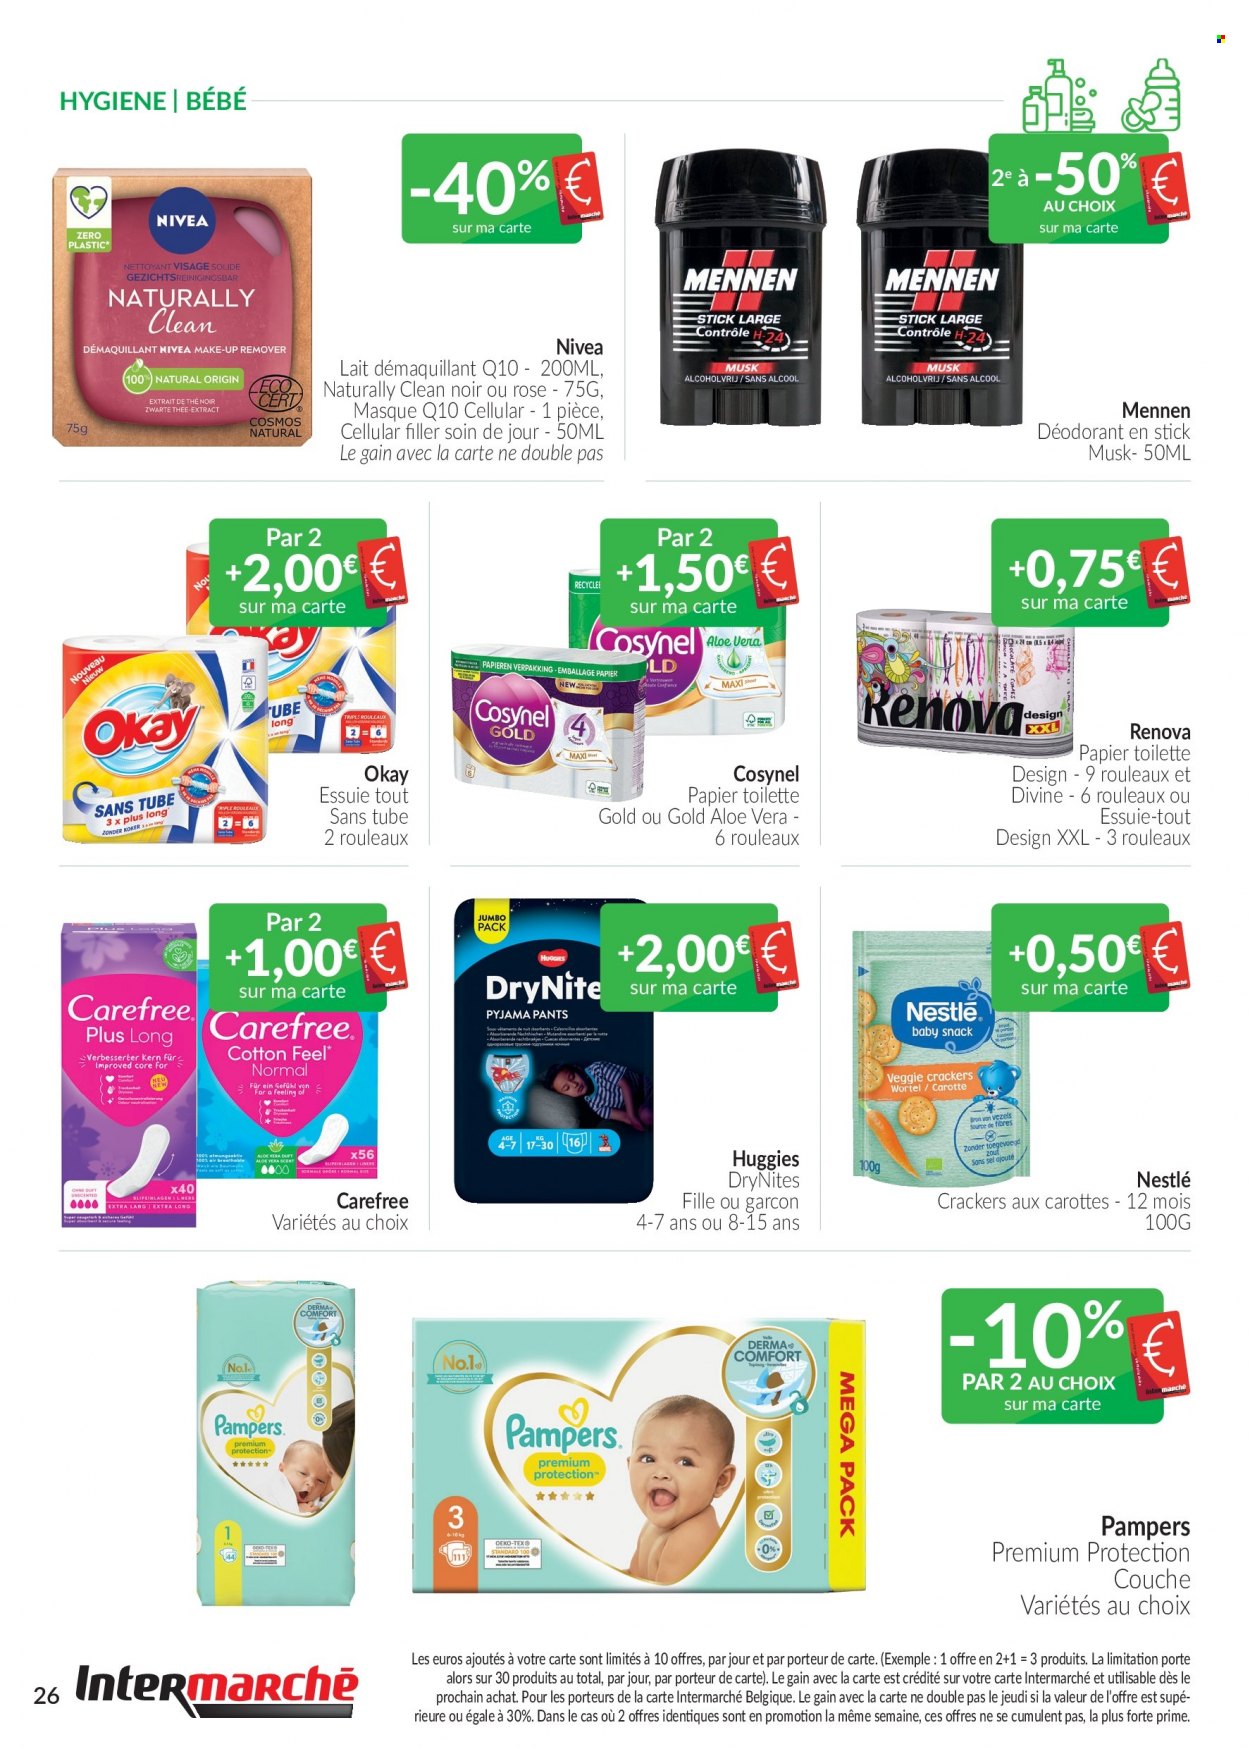 thumbnail - Intermarché-aanbieding - 01/12/2022 - 31/12/2022 -  producten in de aanbieding - Nivea, Nestlé, crackers, Huggies, Pampers, deodorant. Pagina 26.